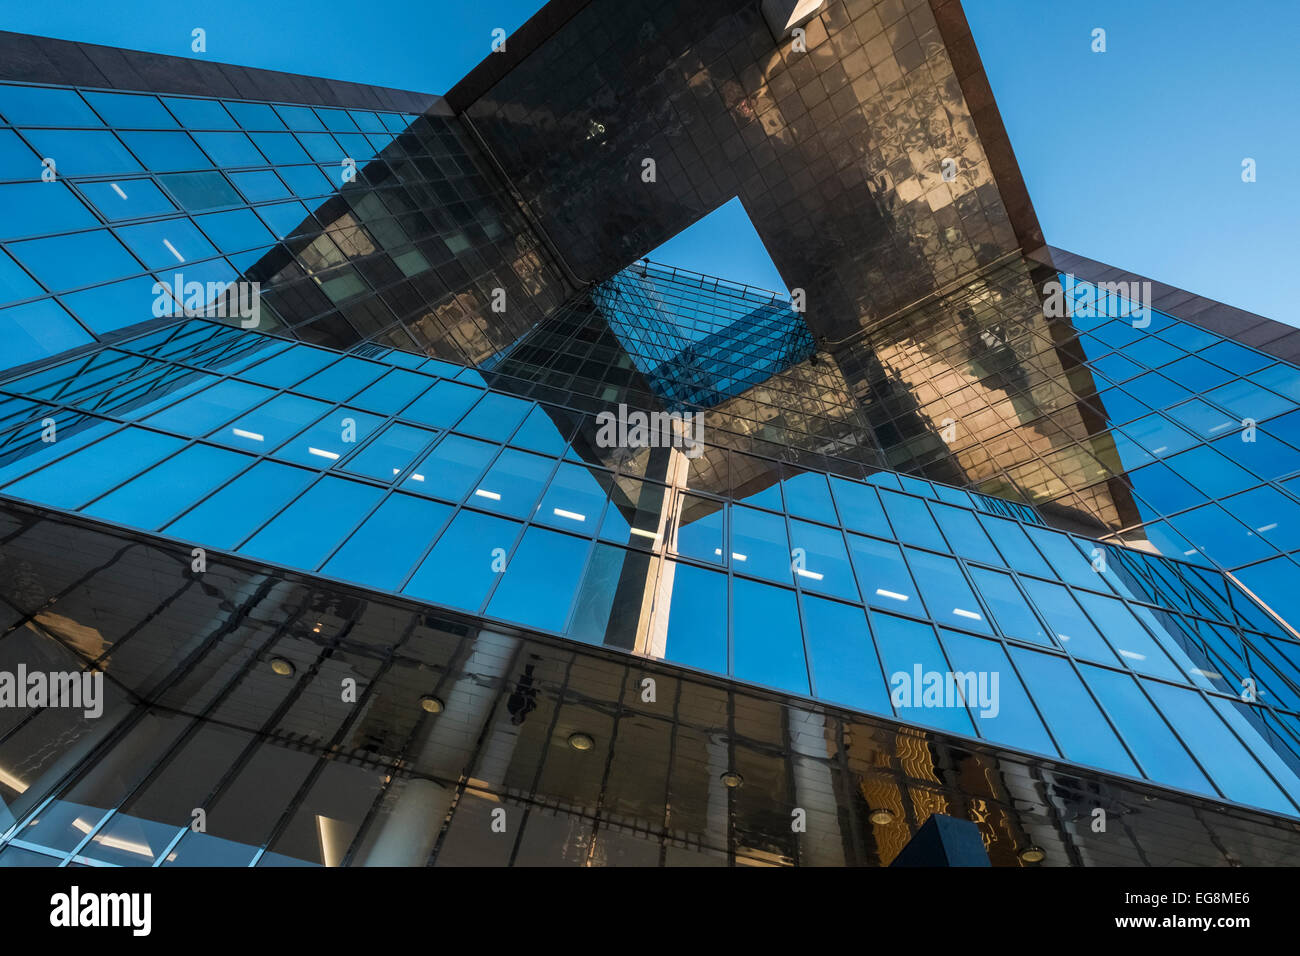 Vertical viewpoint of modern architecture, 1 London Bridge building, Southwark, London, SE1 9BG, UK Stock Photo